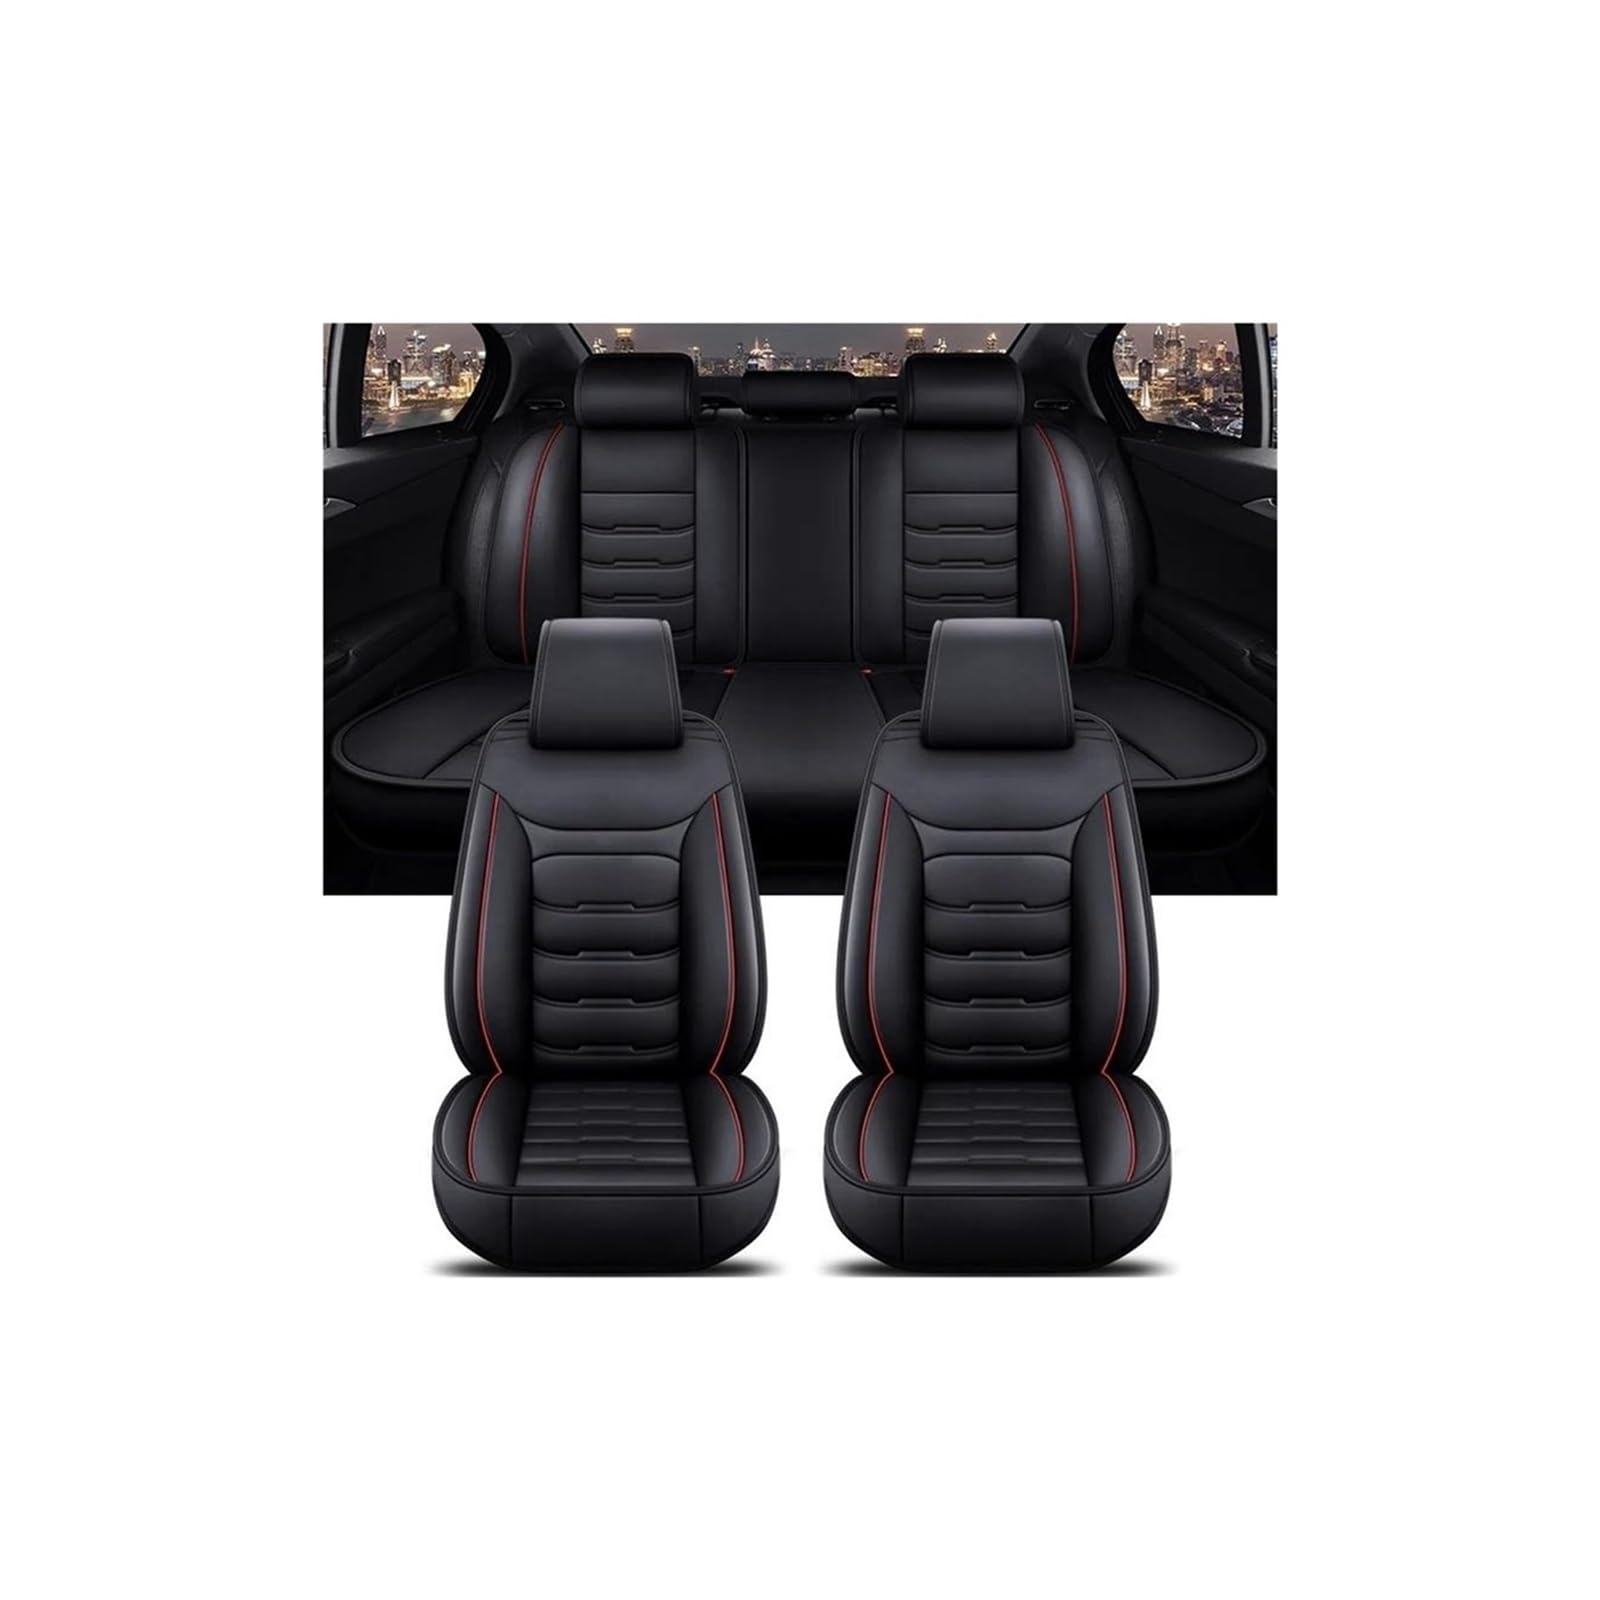 YIJIAVSX Auto-Sitzbezüge Auto-Sitzbodenschutzmatte Für Mercedes C-Klasse W202 W203 W204 W205 A205 C204 C205 S202 S203 S204 S205 Rücksitzbezüge(2) von YIJIAVSX